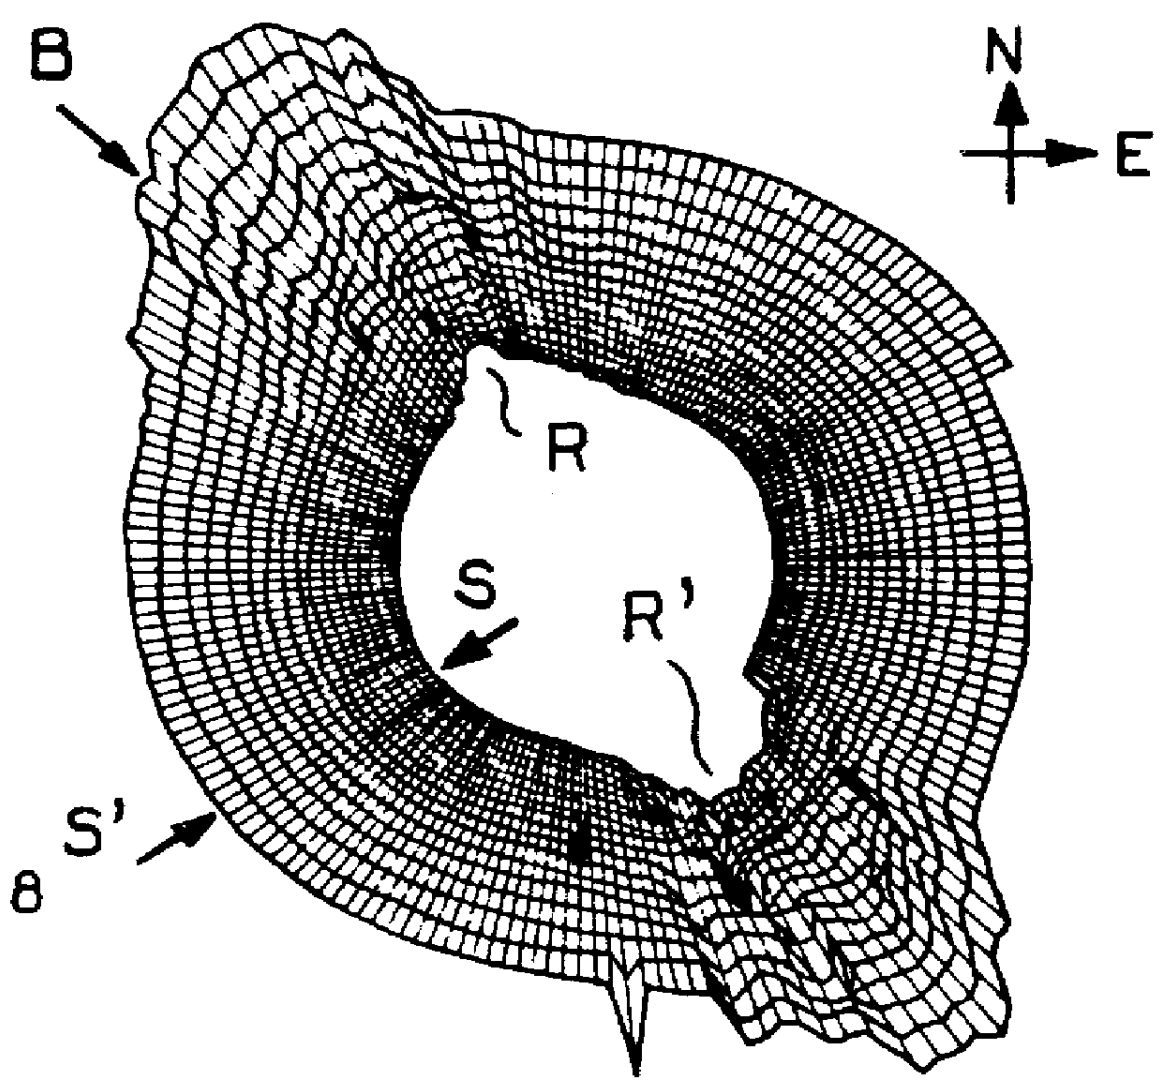 Method and apparatus for logging non-circular boreholes